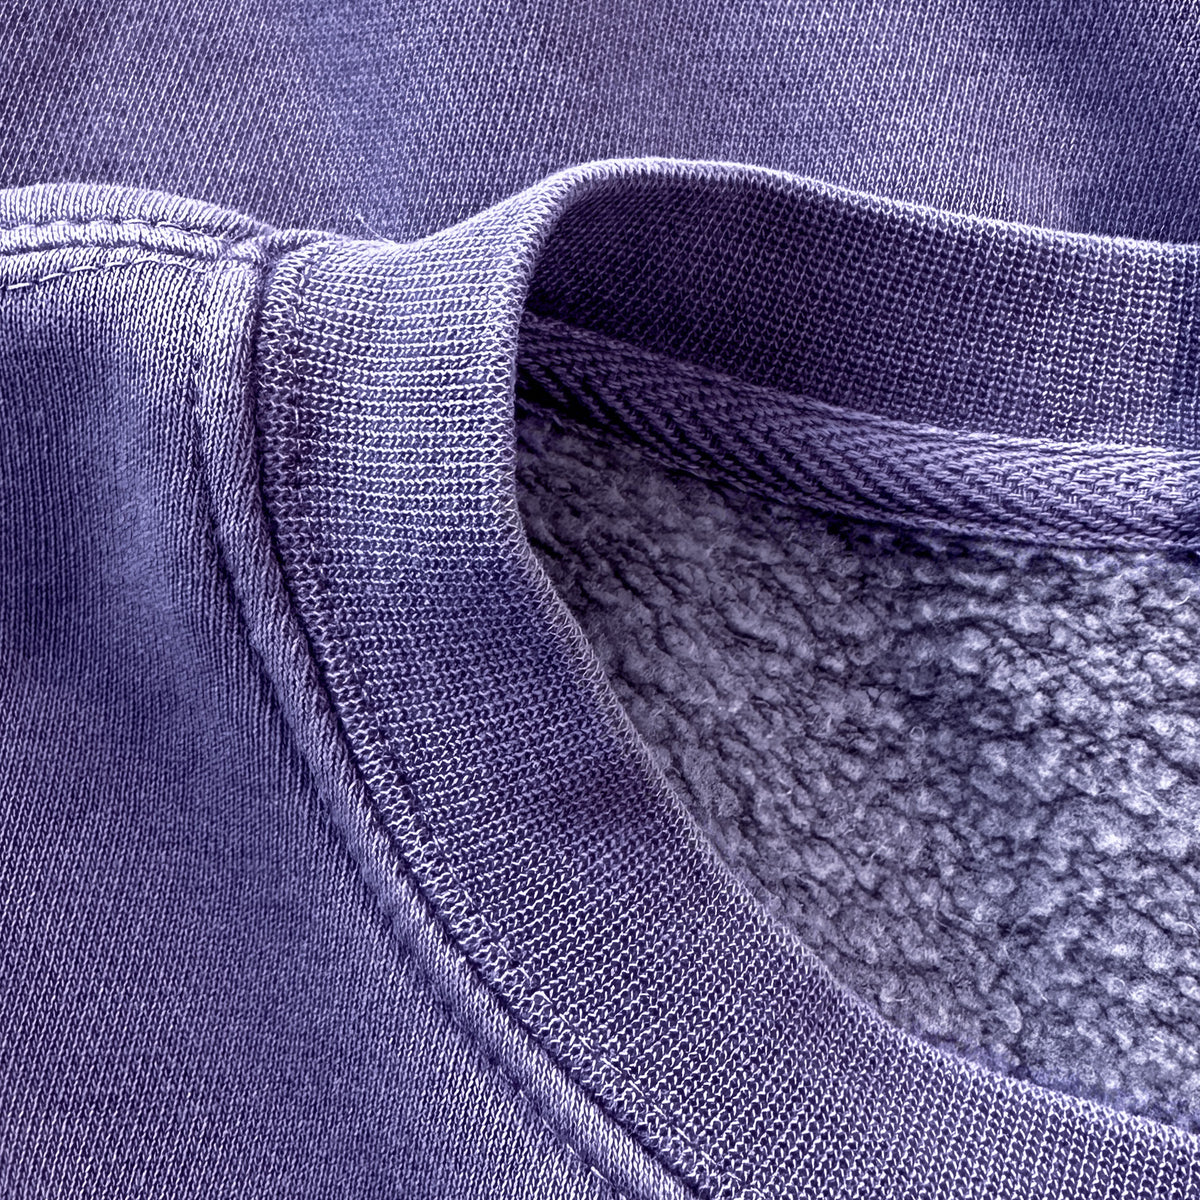 Common Loon - Gavia immer - Unisex Pigment Dyed Crew Sweatshirt